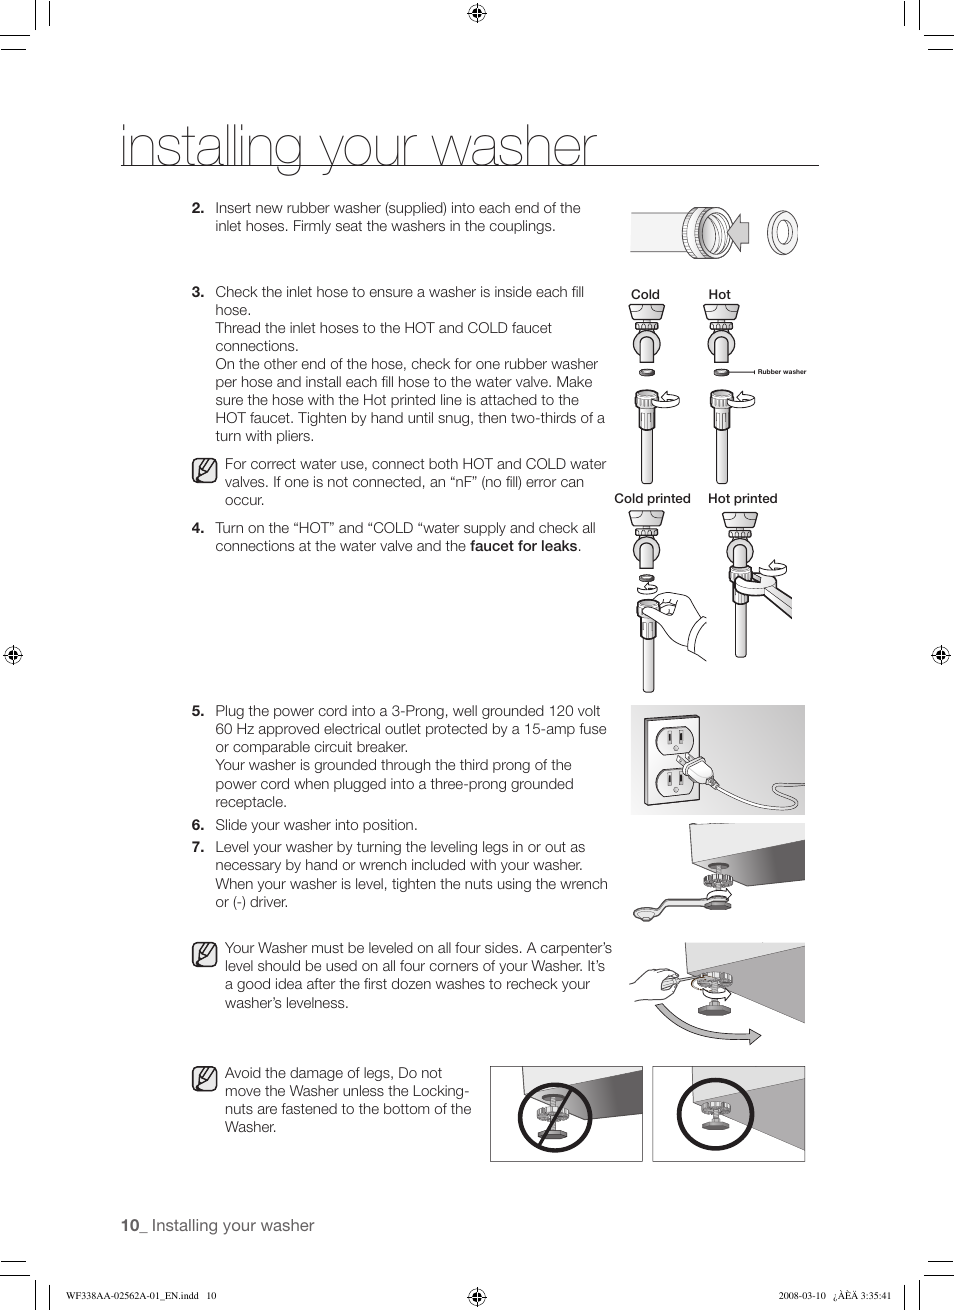 Samsung Wf448aap Xaa 08 Washer Owner's Manual